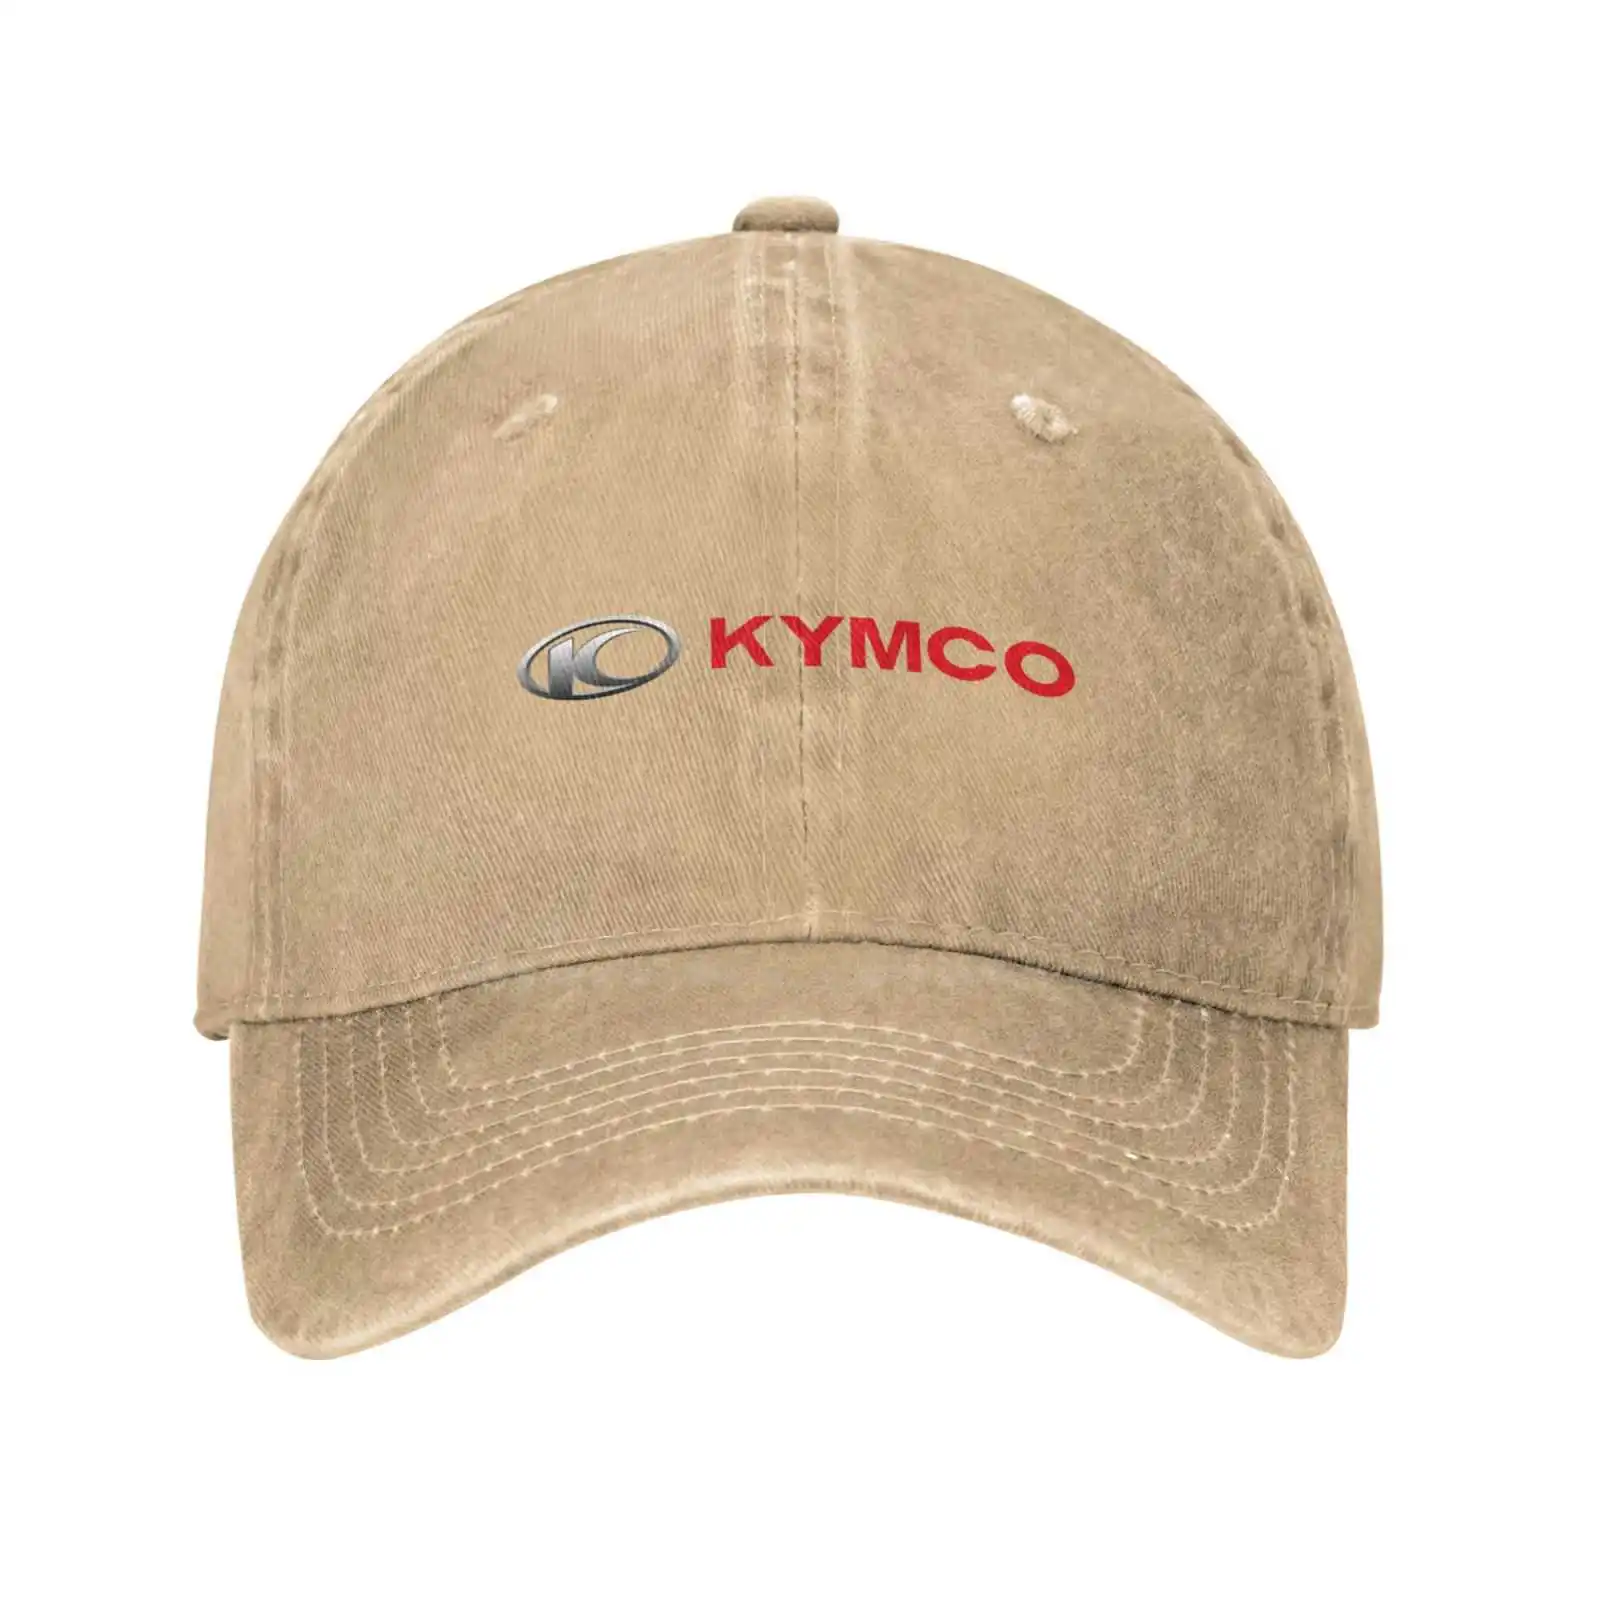 Kymco Logo Fashion quality Denim cap Knitted hat Baseball cap